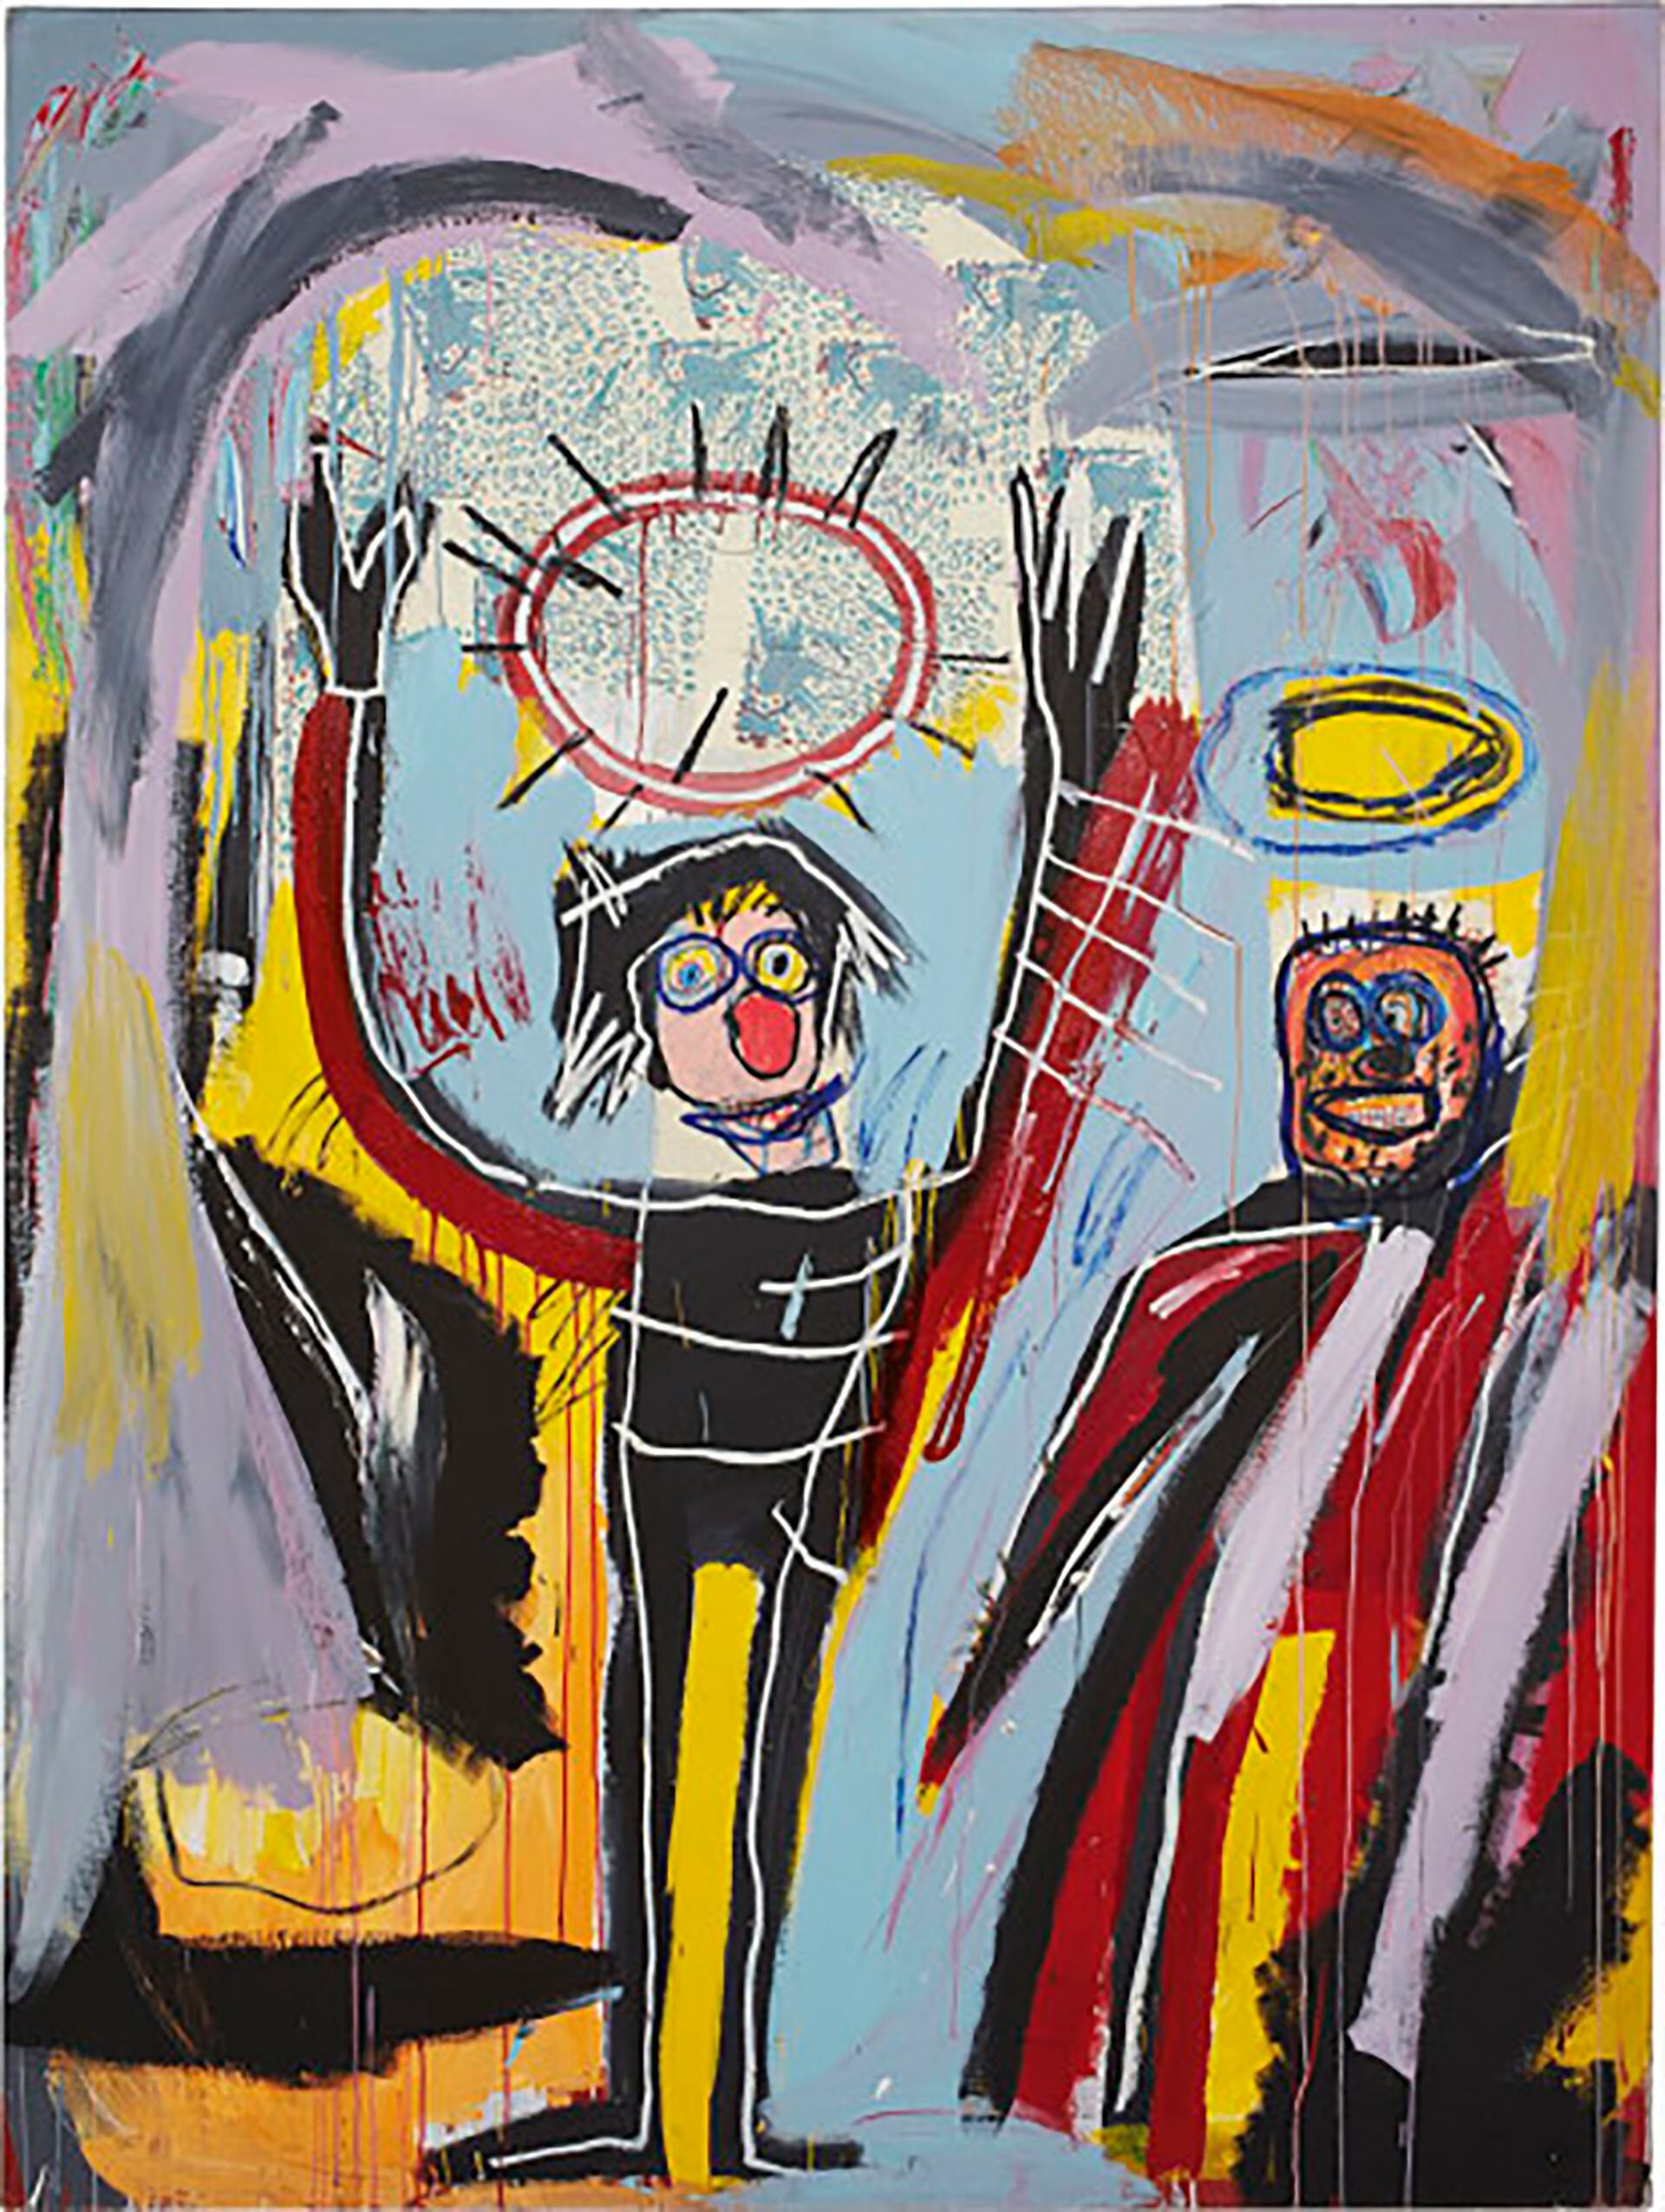 The work Humidity, by Basquiat INIGO PHILBRICK